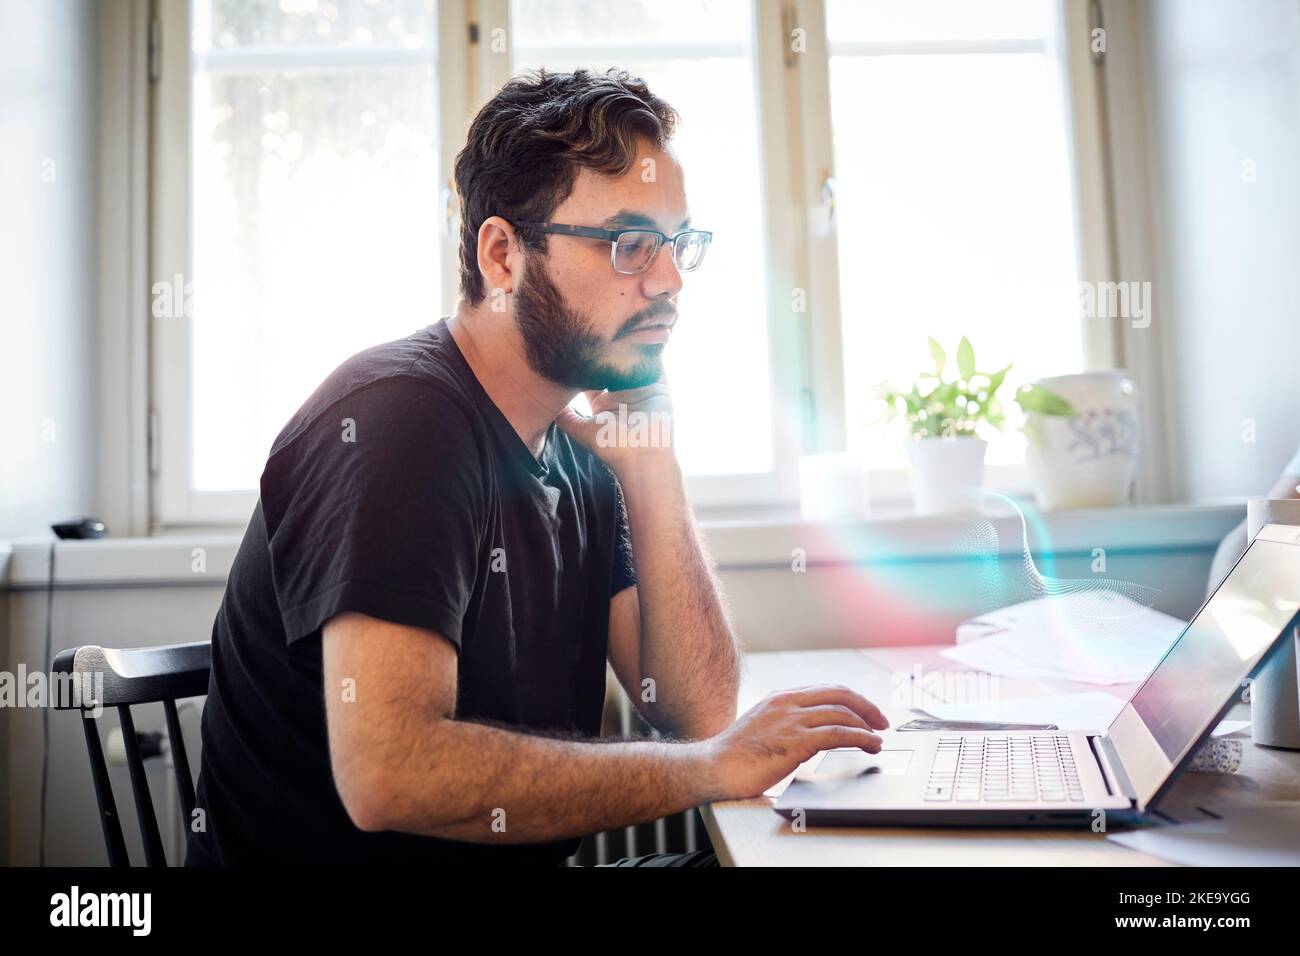 Man reading fake news on computer Stock Photo